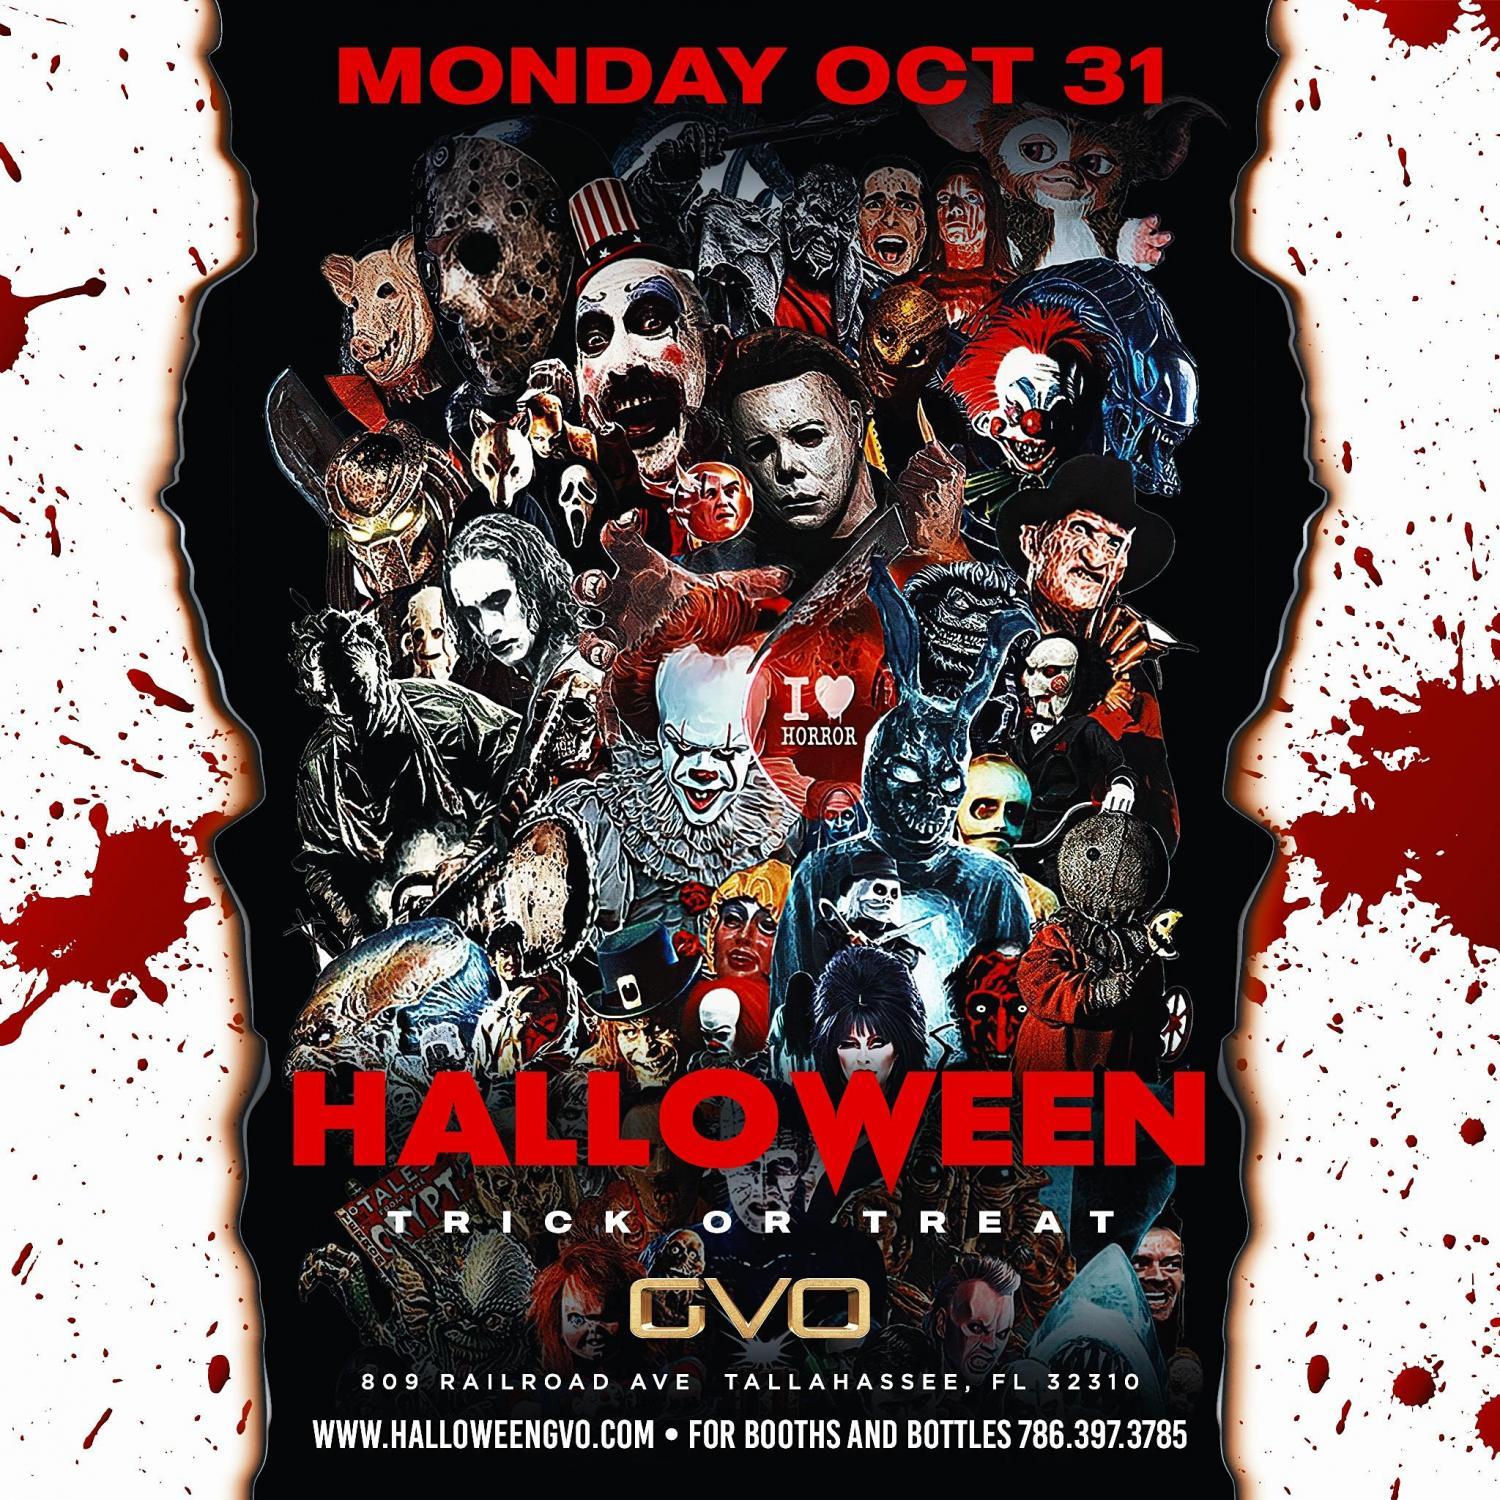 Halloween @ GVO Happy Halloween
Mon Oct 31, 10:00 PM - Wed Nov 2, 2:00 AM
in 12 days